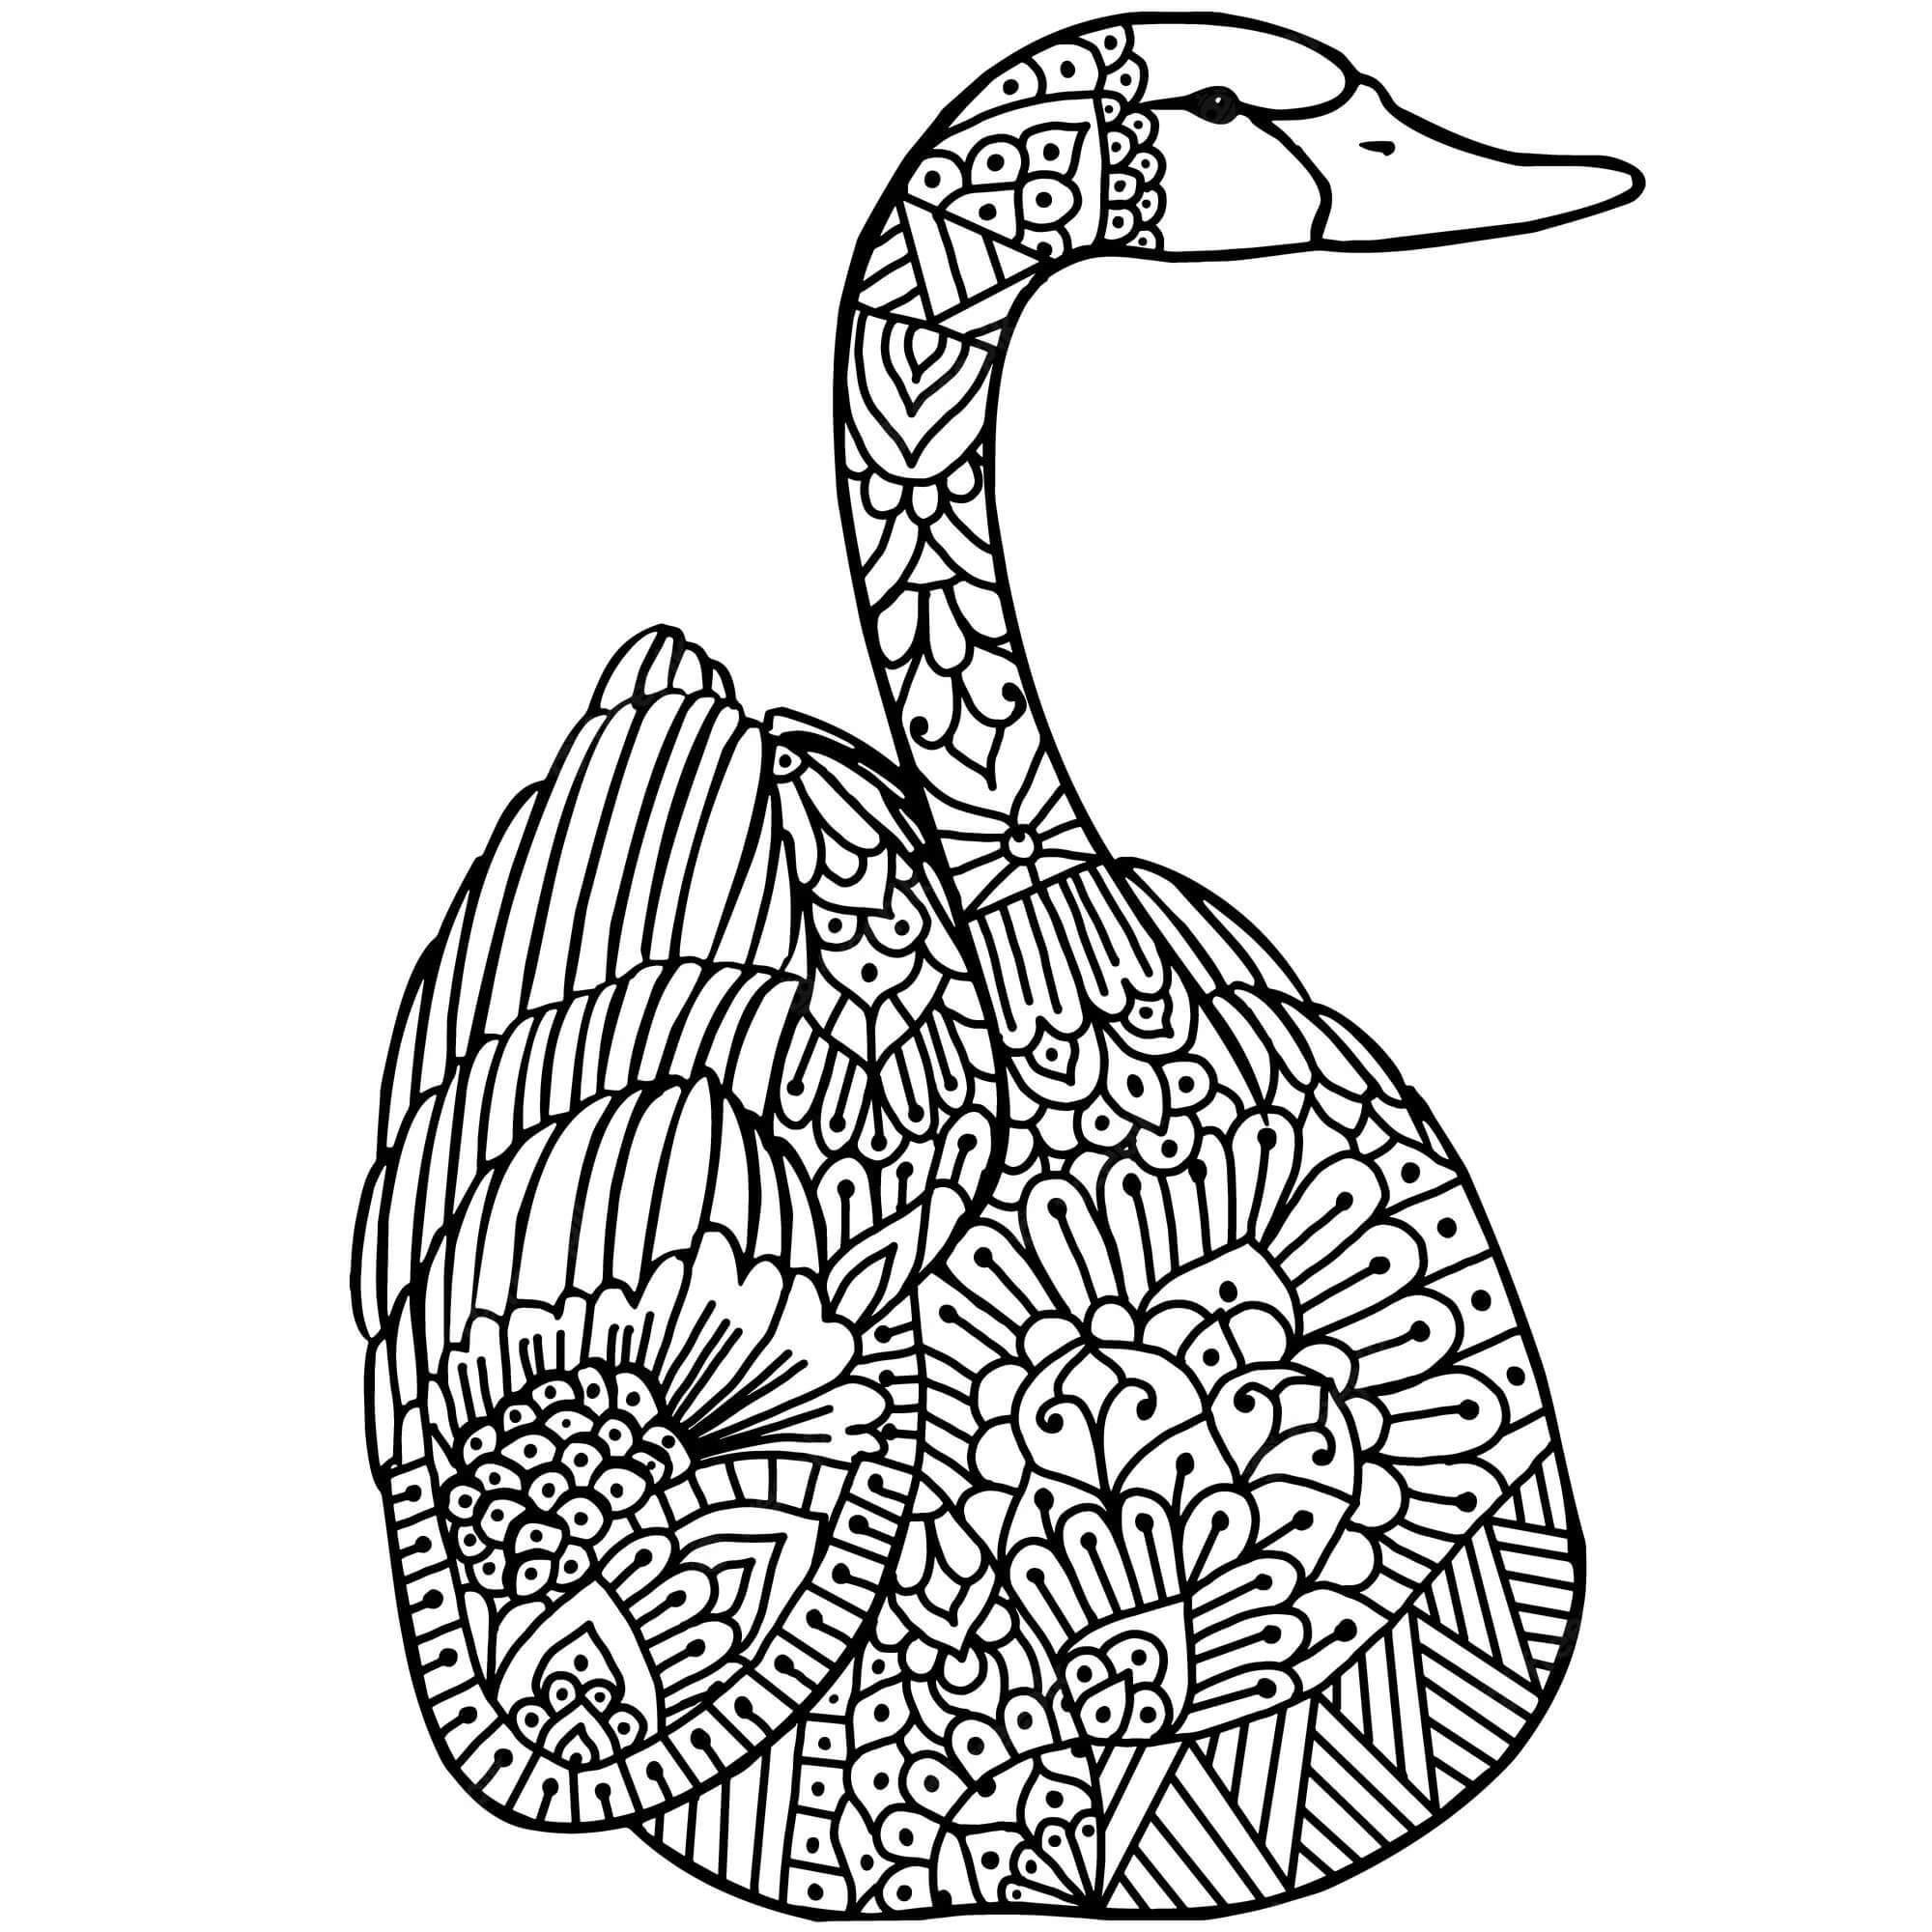 Mandala Swan Coloring Page - Sheet 2 Mandalas